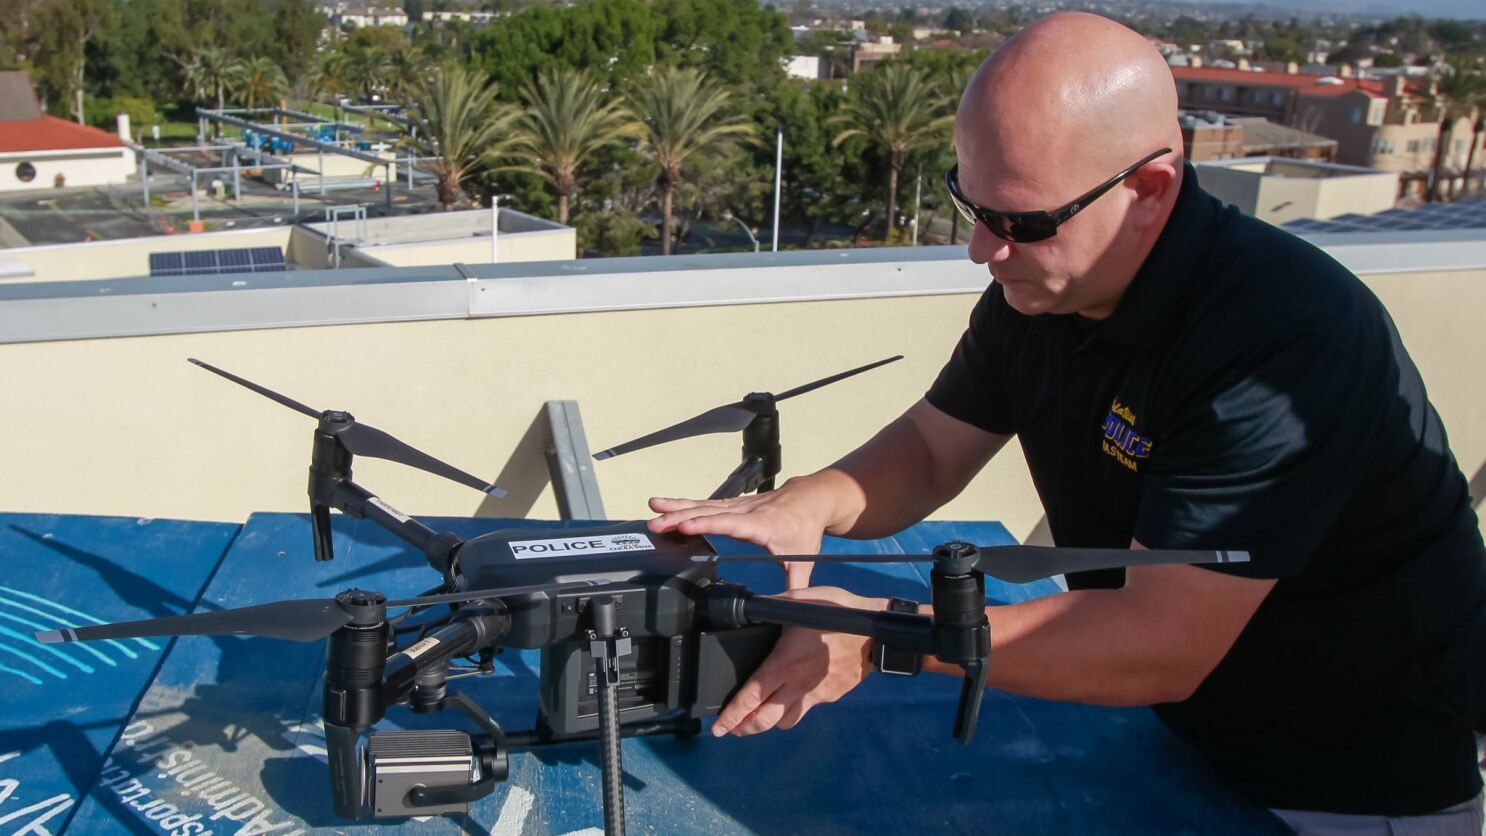 Chula Vista police drone program wins state technology award - The San Diego Union-Tribune